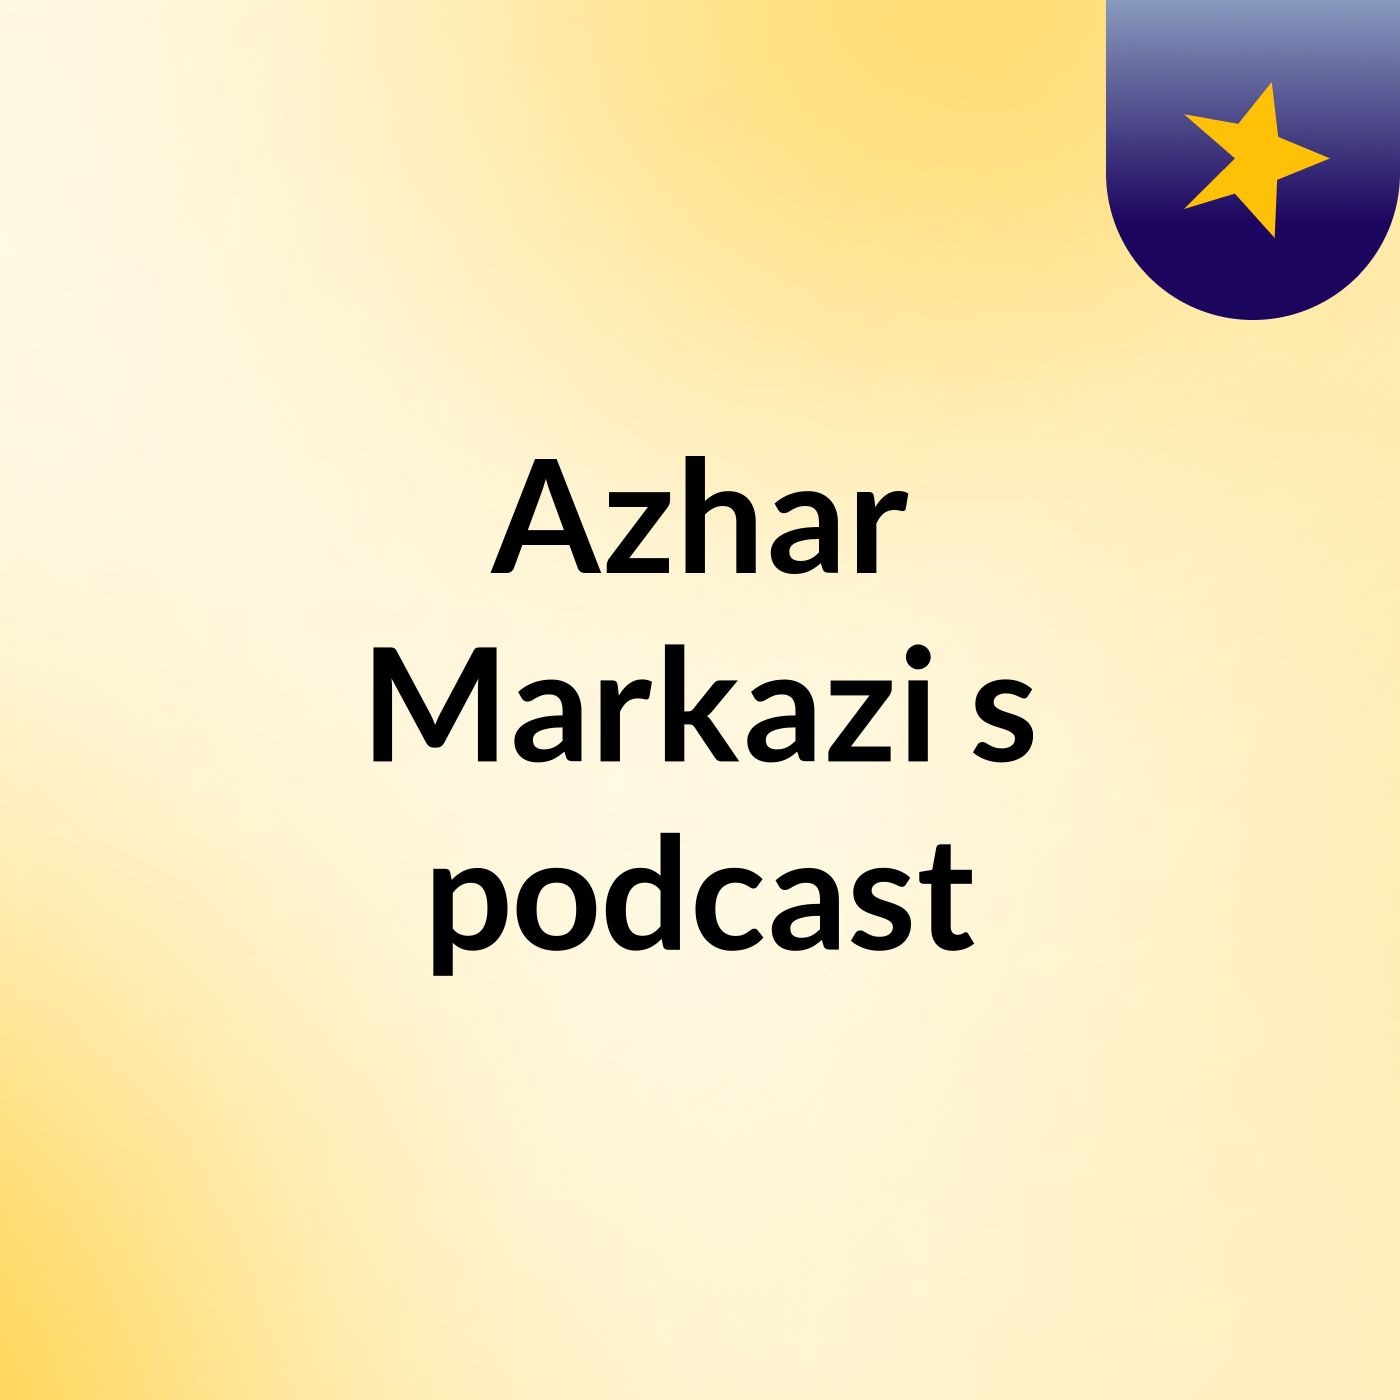 Episode 5 - Azhar Markazi's podcast